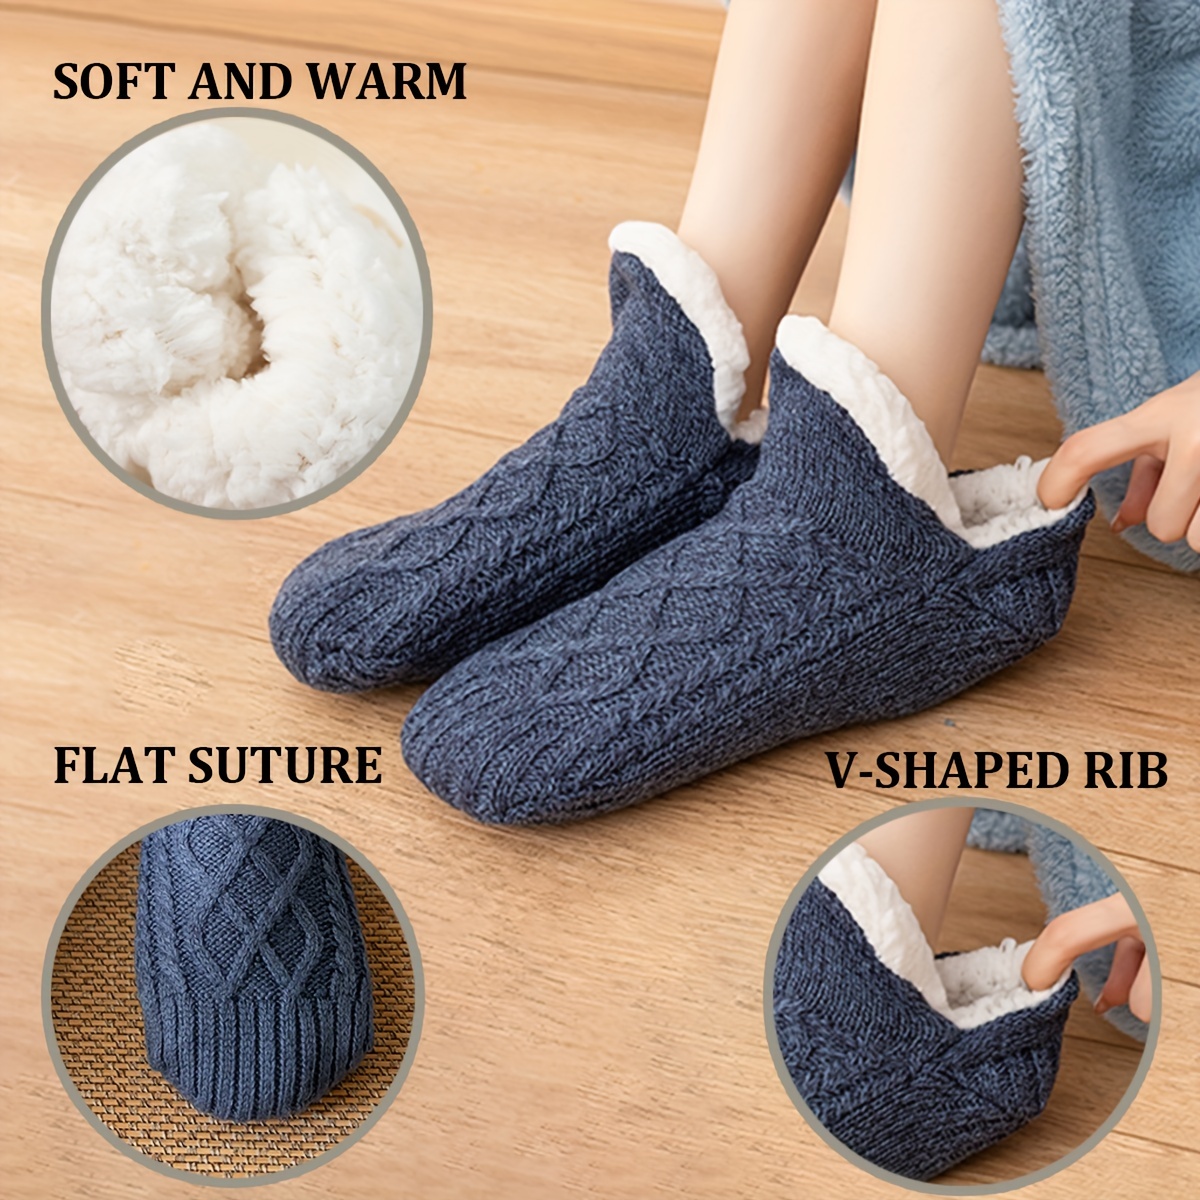 Super Soft Socks With Non-slip Grip 